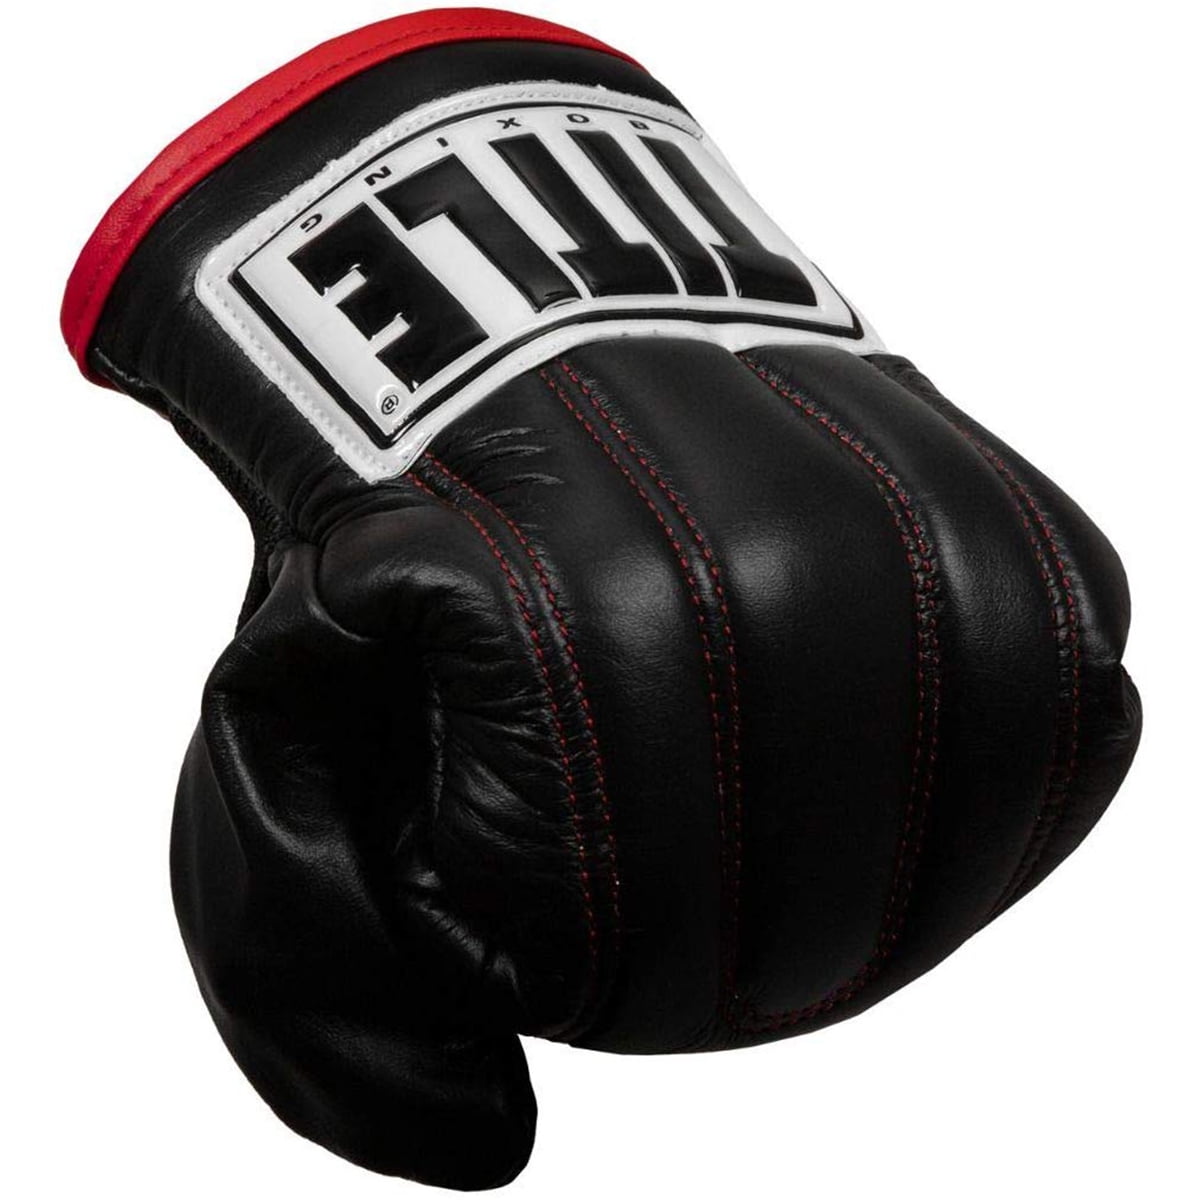 boxing gloves travel bag